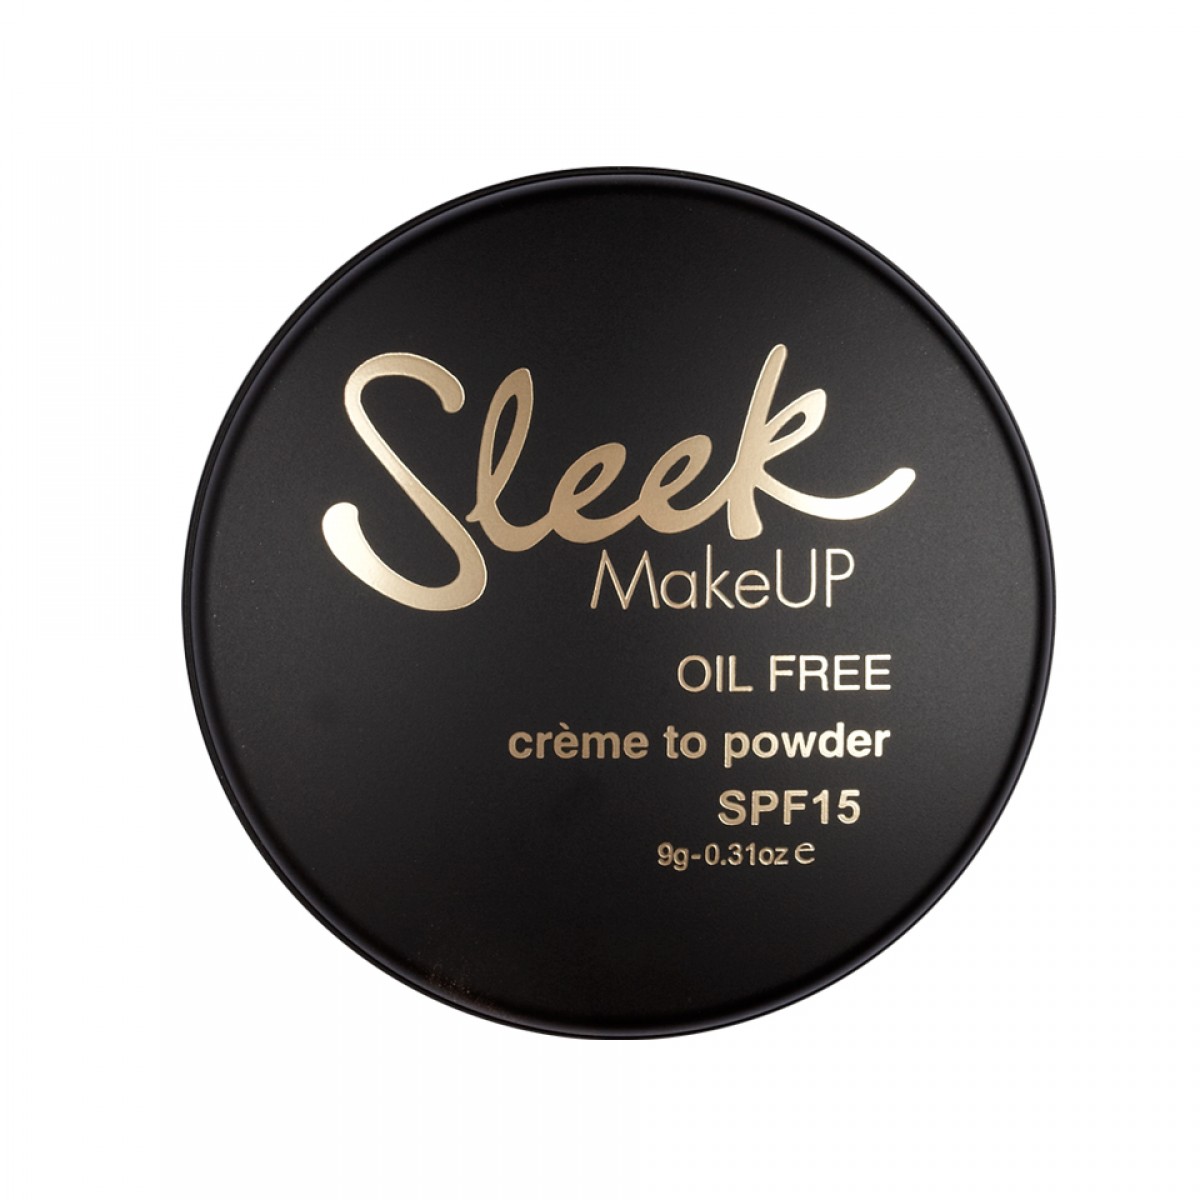 Sleek Crème to Powder Foundation